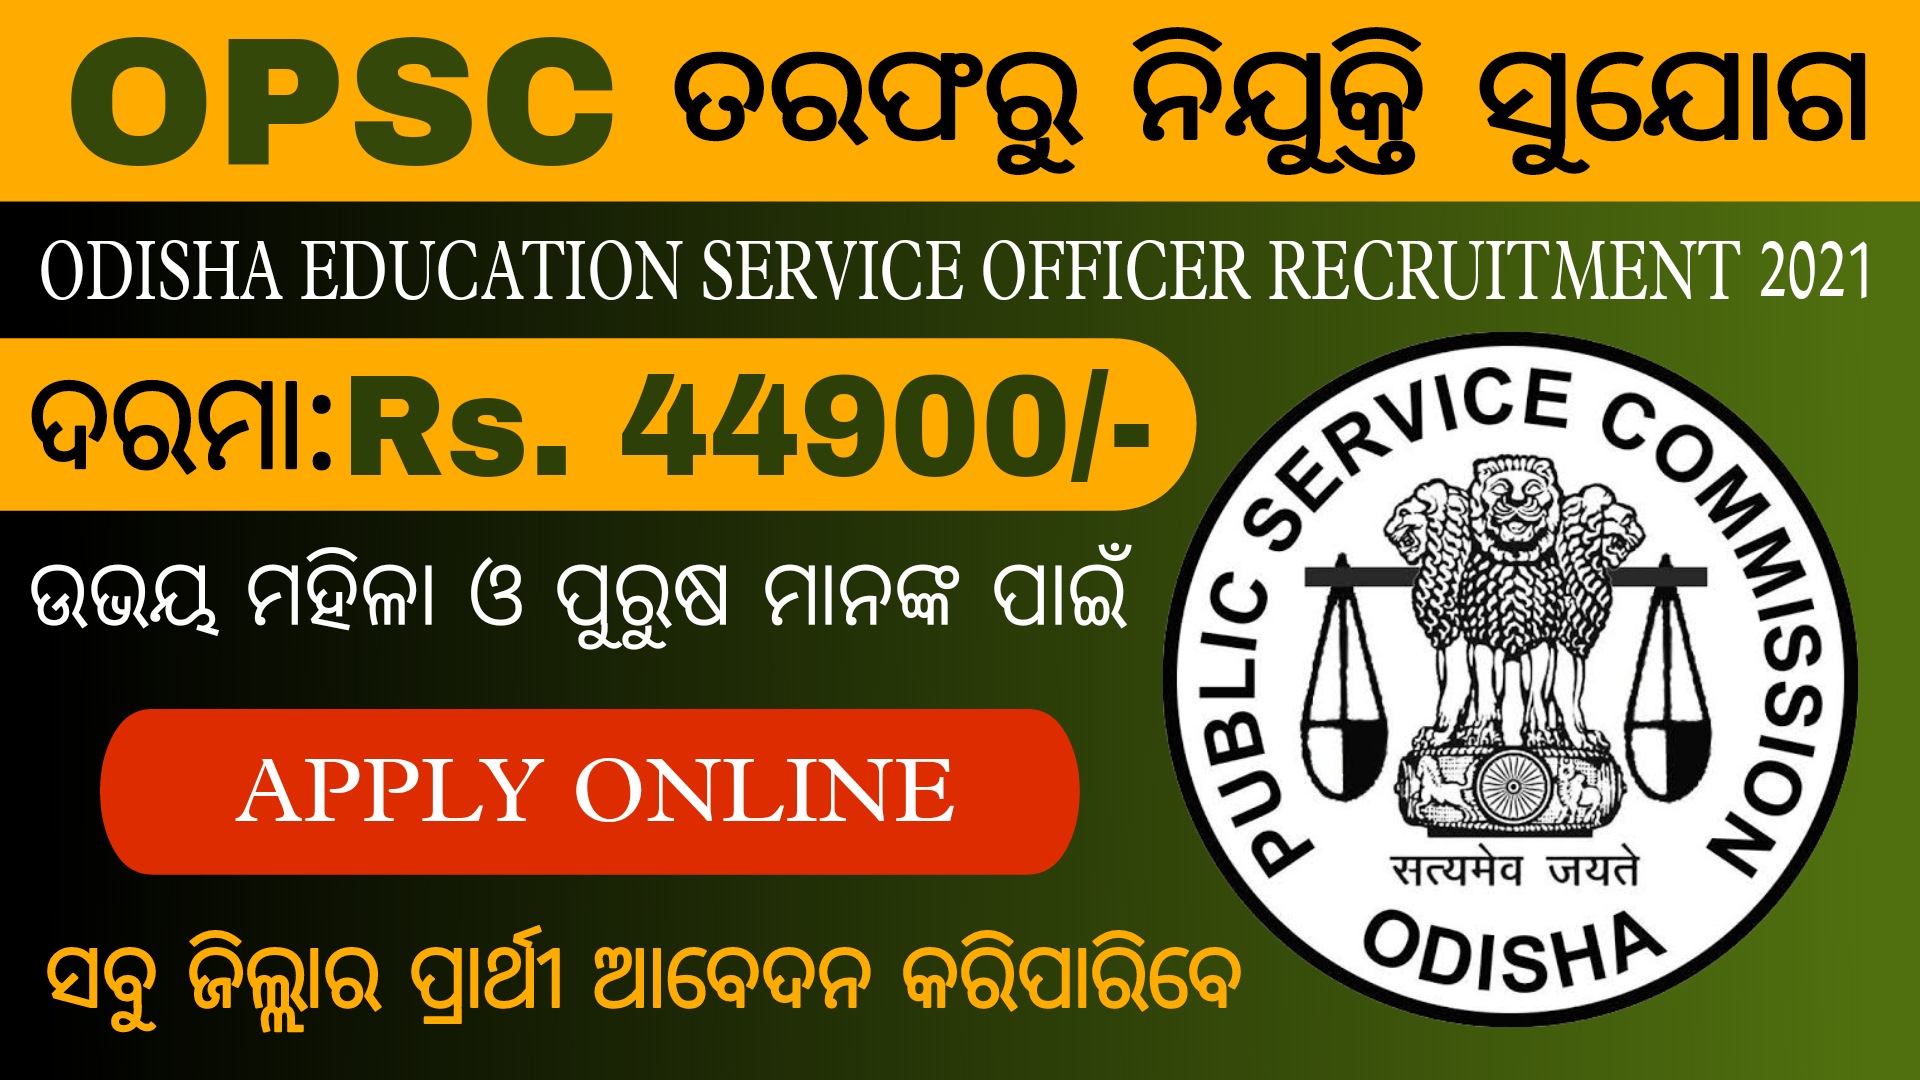 OPSC Odisha Education Service Officer Recruitment 2021 – Jobs in Odisha